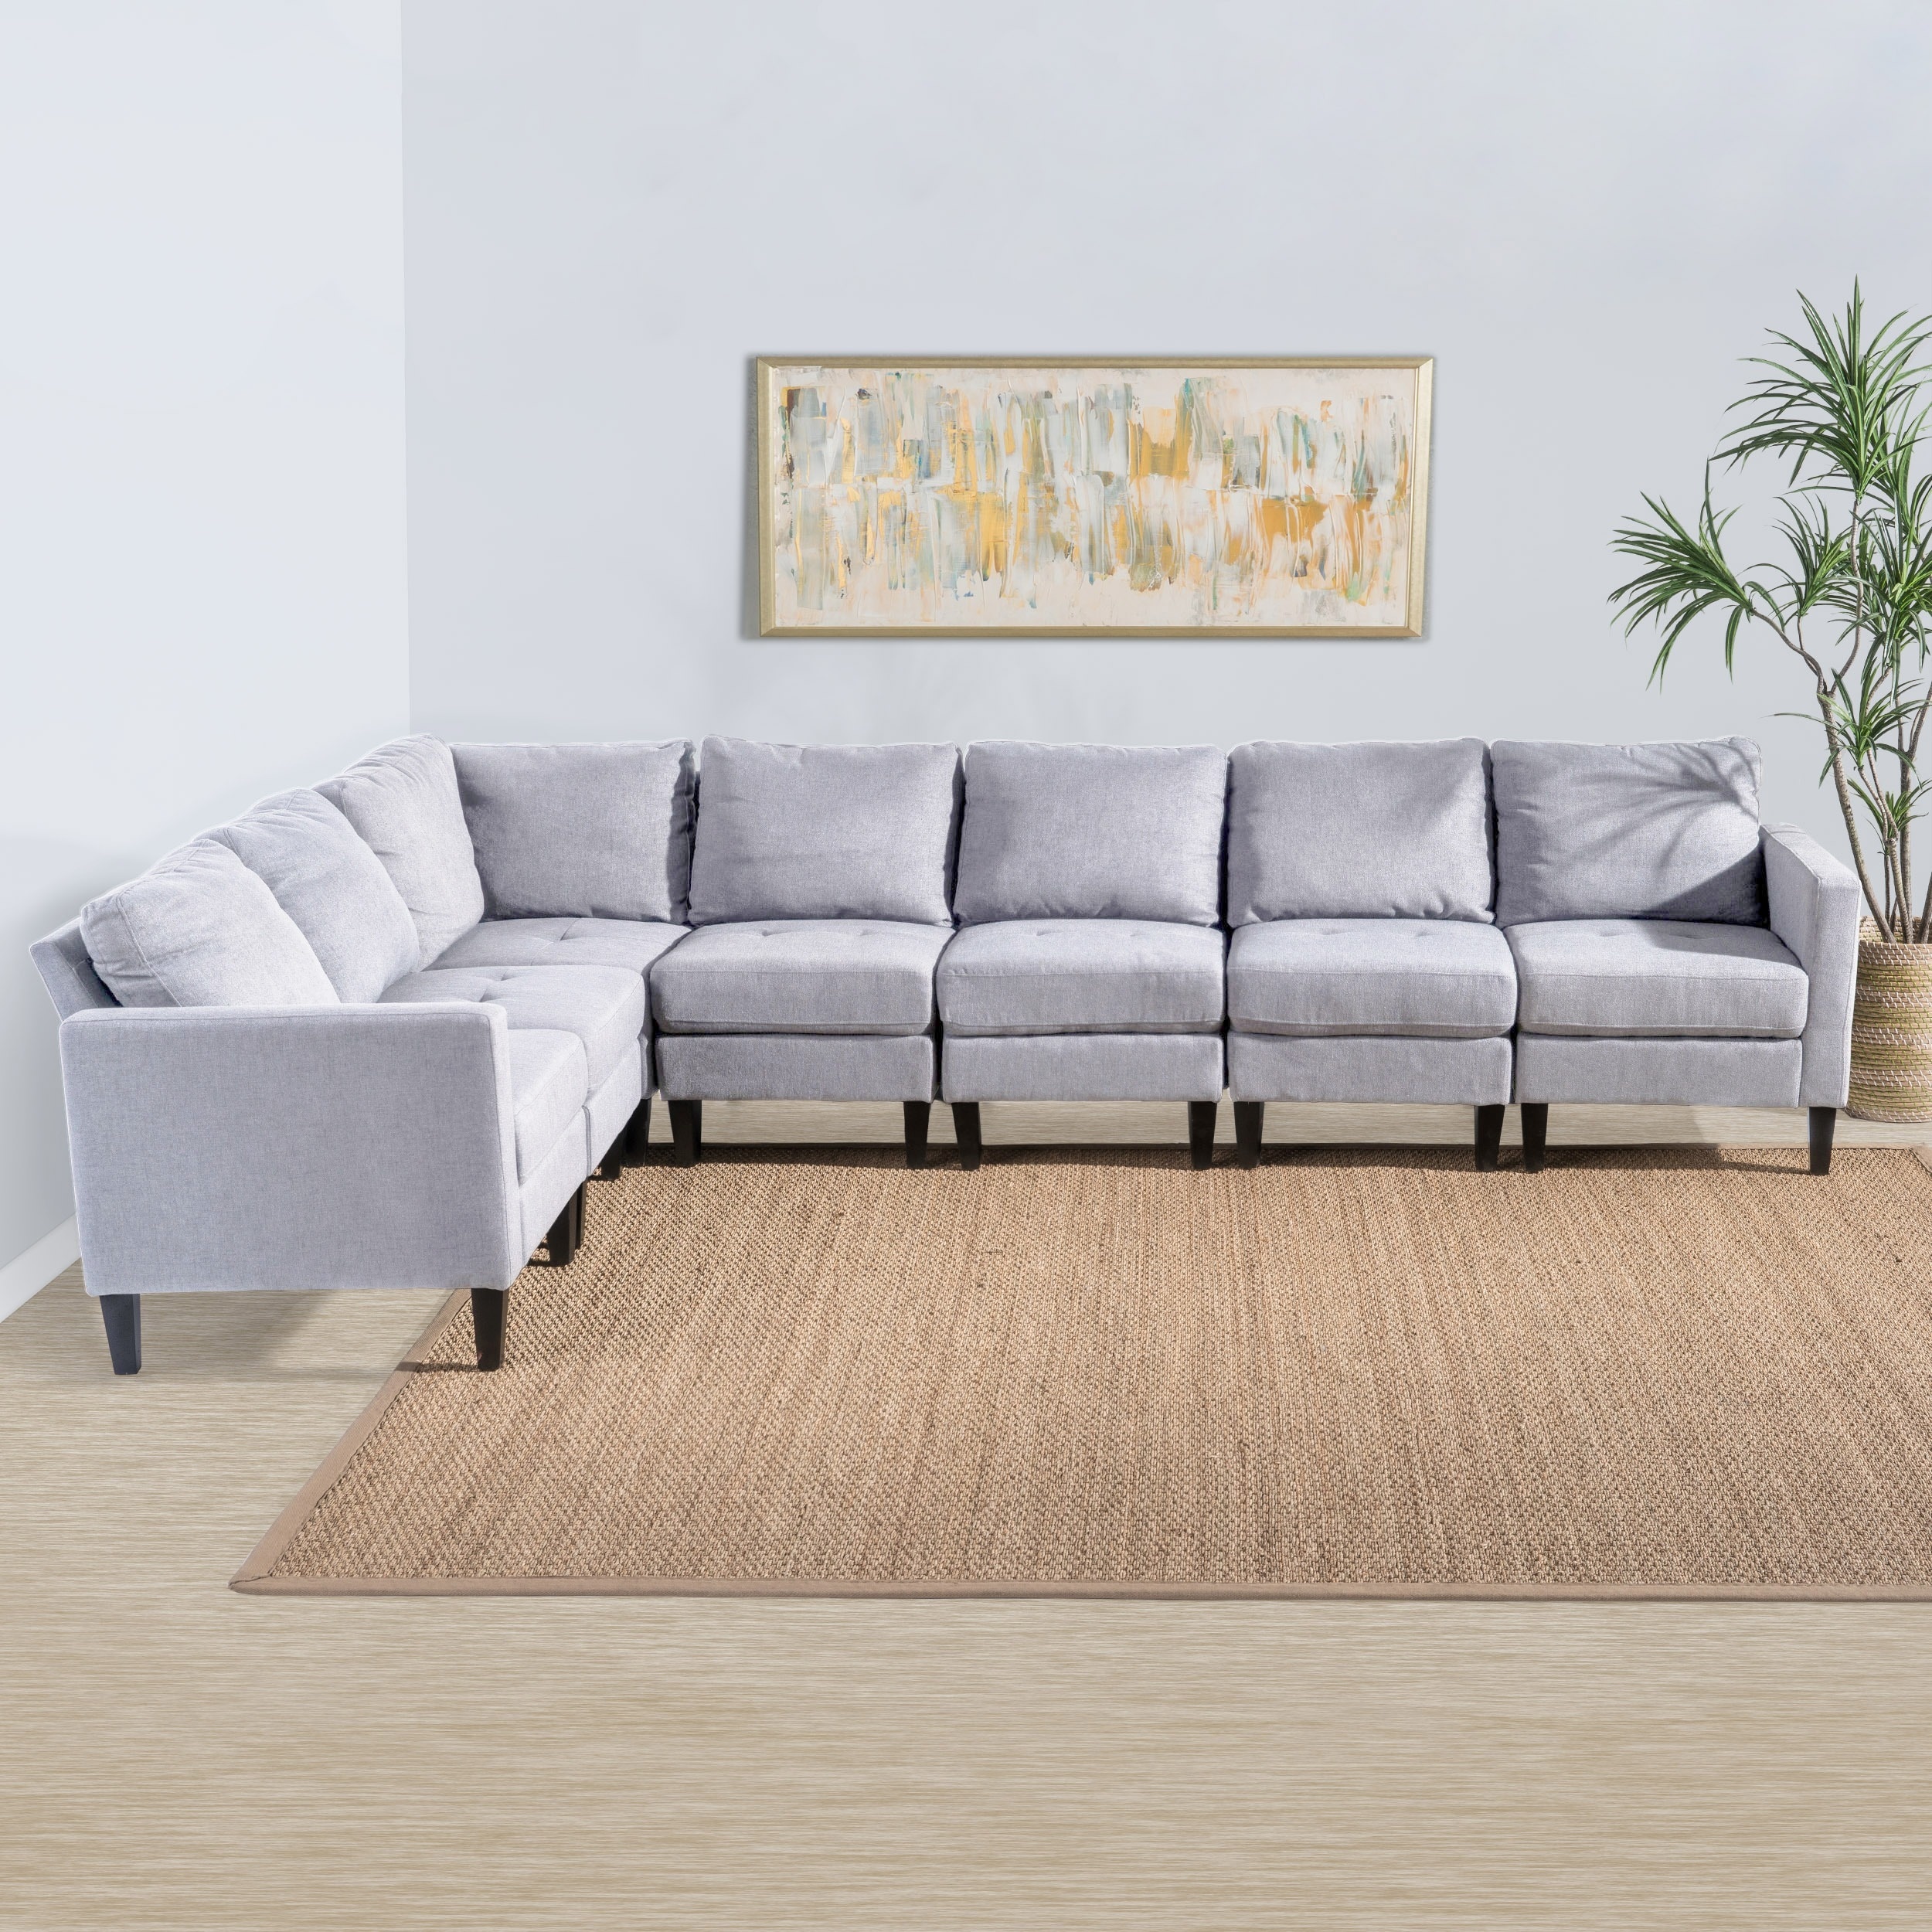 Zahra 7 Piece Fabric Sectional Sofa Set By Christopher Knight Home E5f6bace 78c6 4fda 9af2 3129869d94e1 